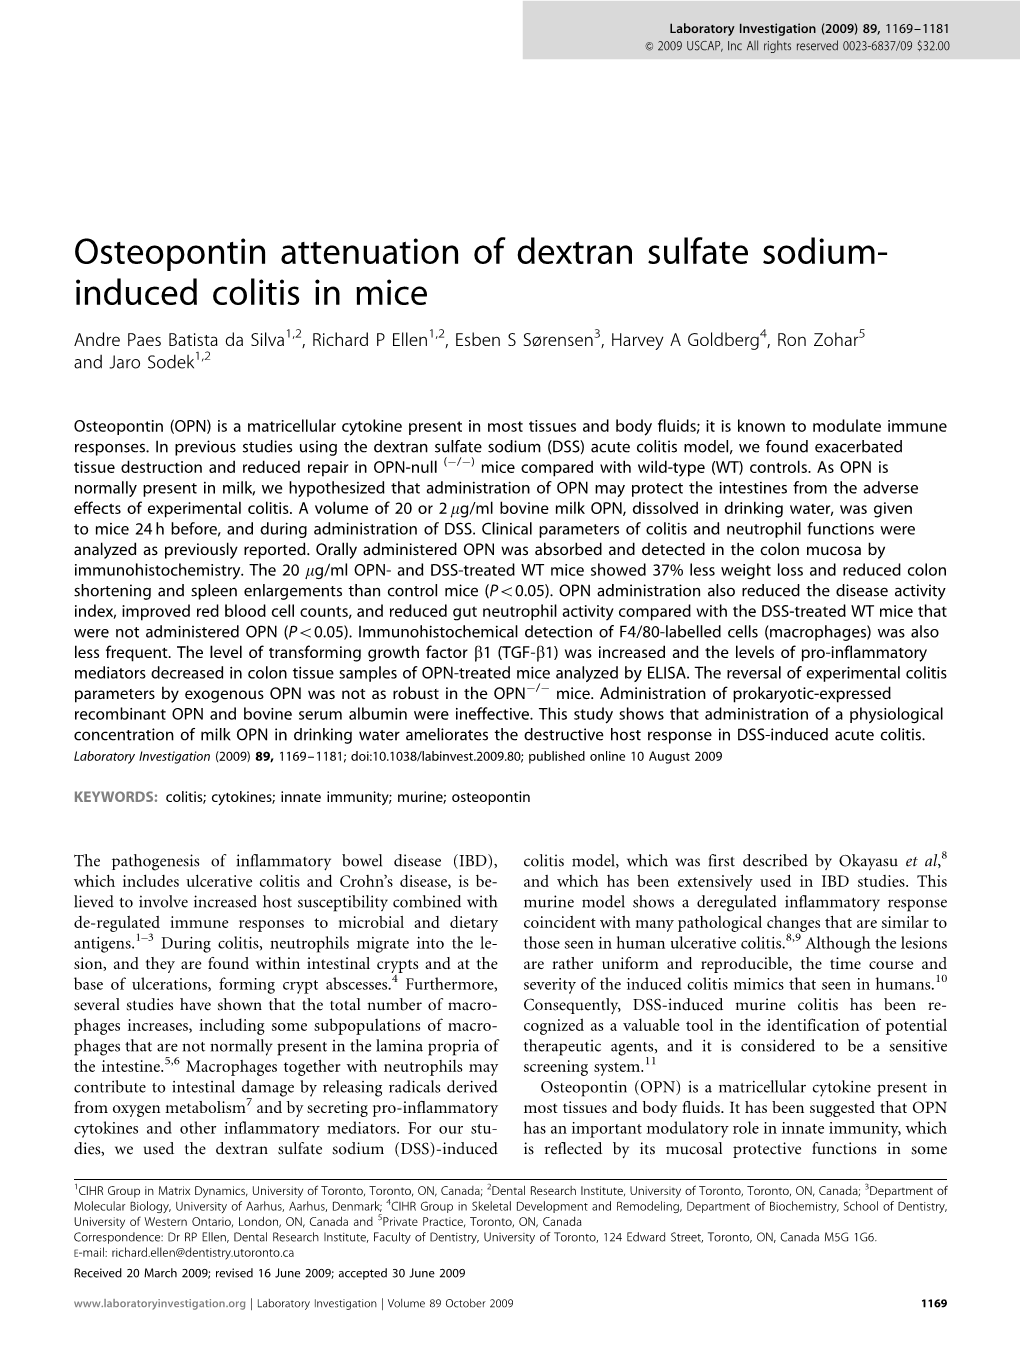 Osteopontin Attenuation of Dextran Sulfate Sodium-Induced Colitis in Mice